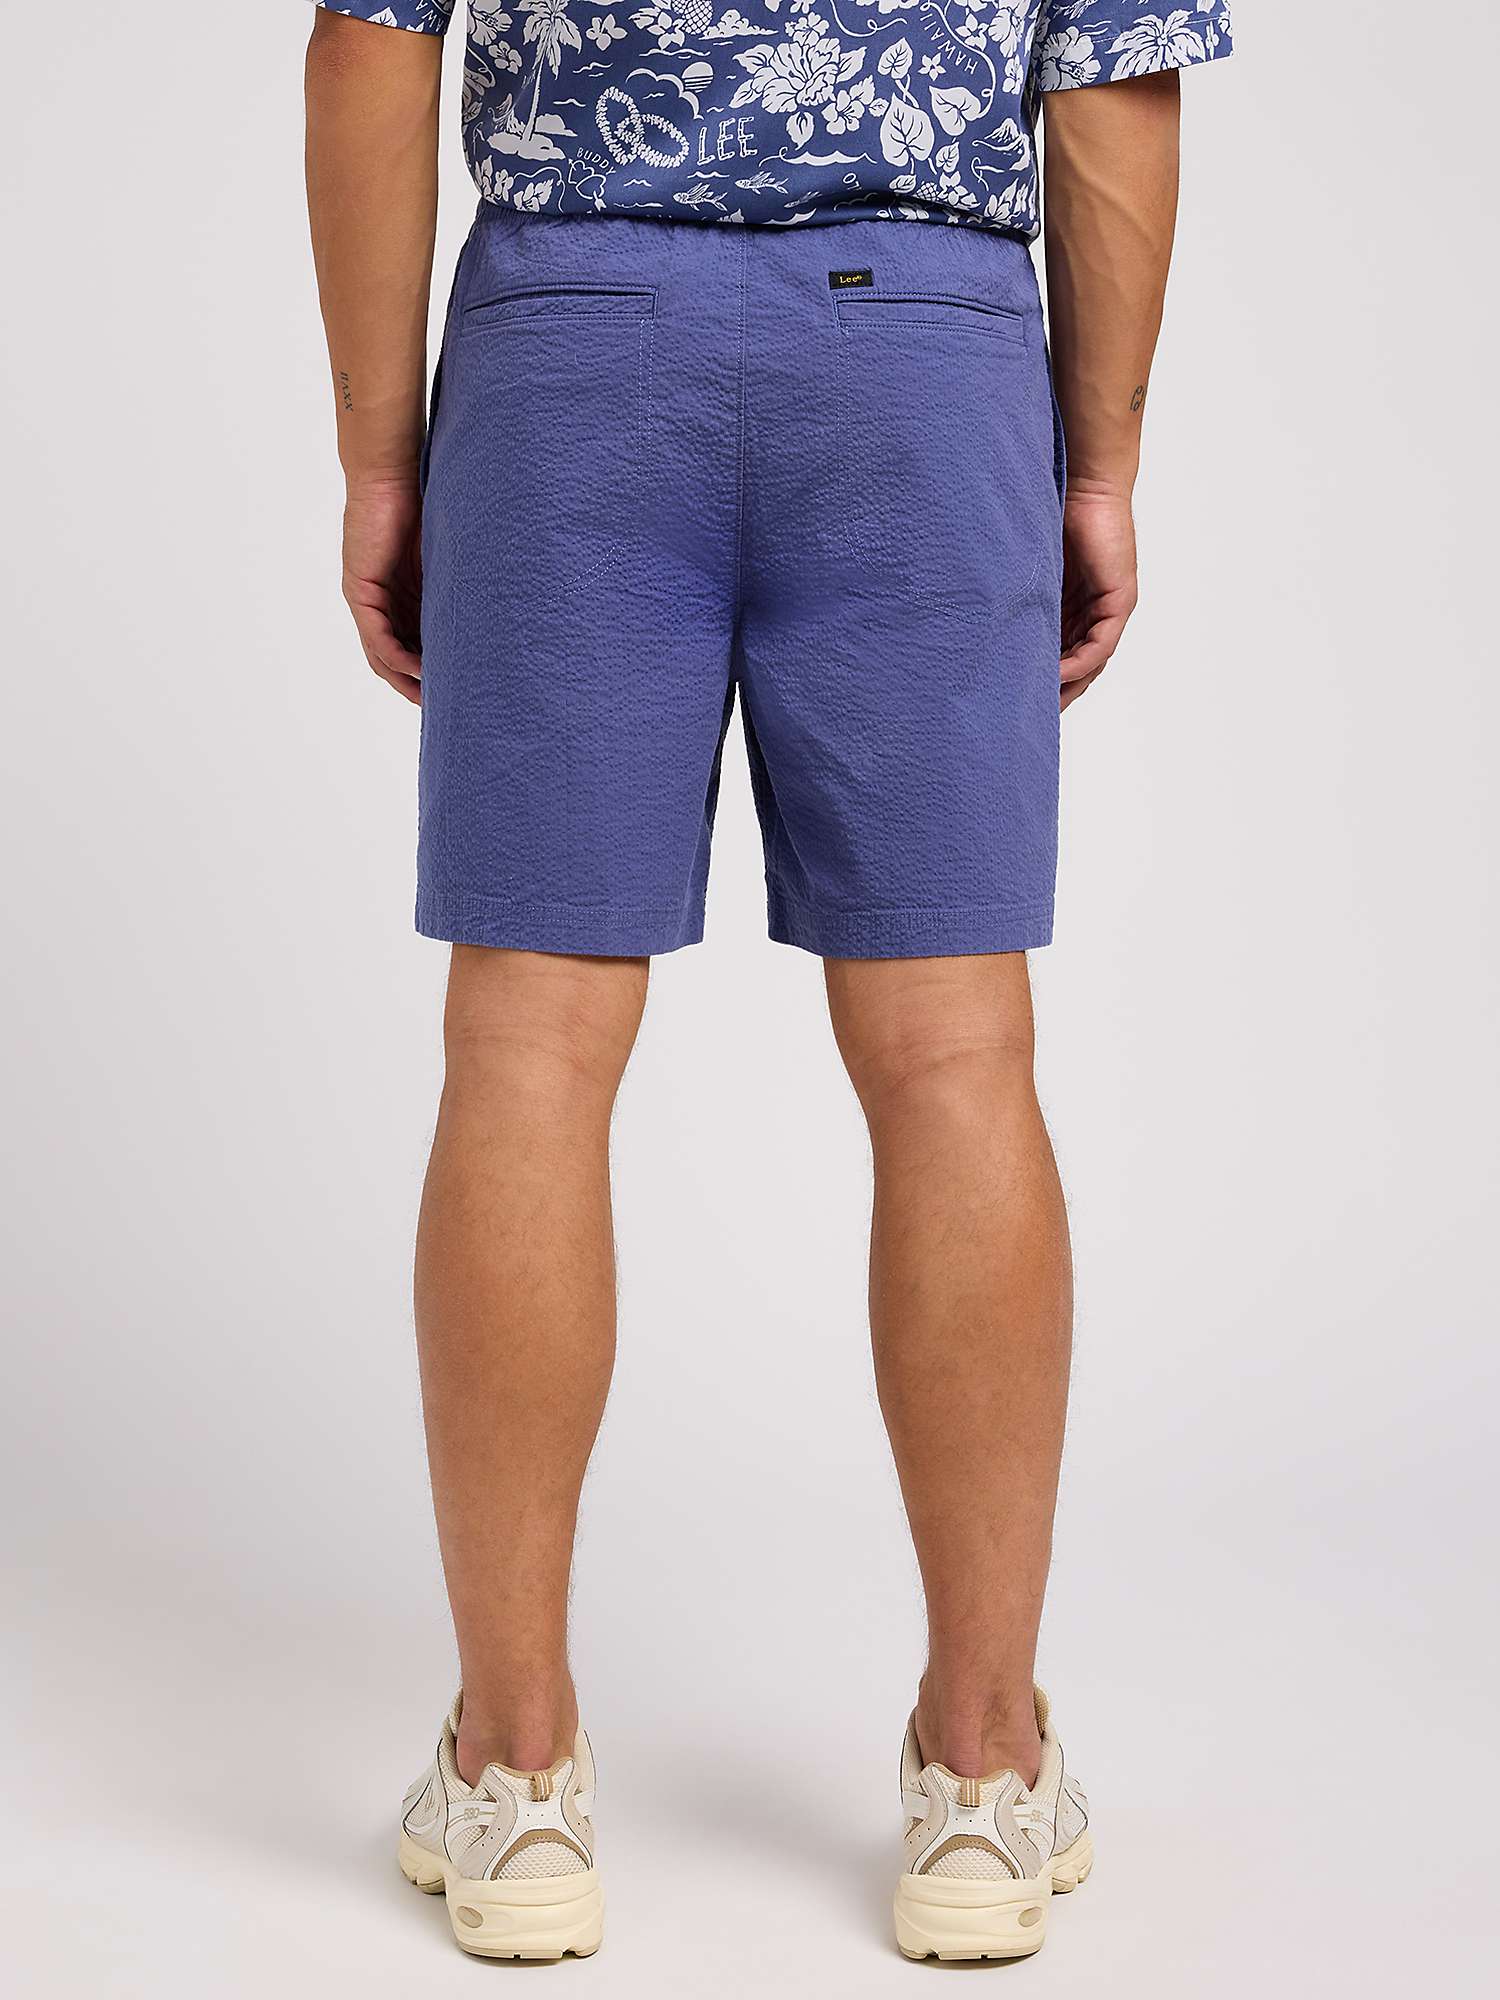 Buy Lee Textured Drawstring Shorts, Surf Blue Online at johnlewis.com